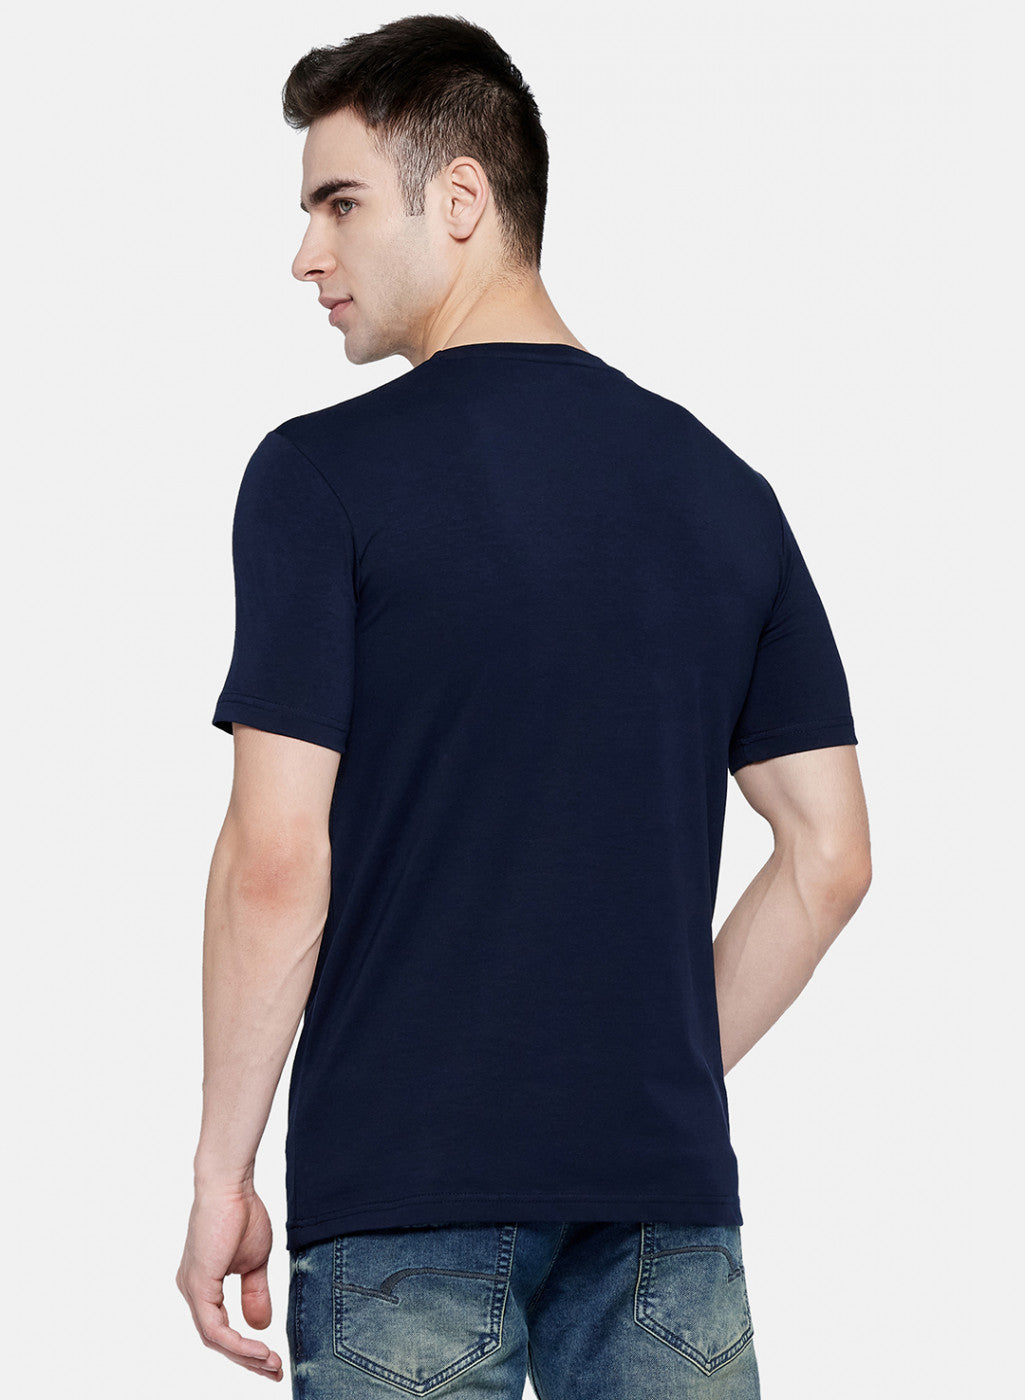 Mens NAvy Blue Plain T-Shirt